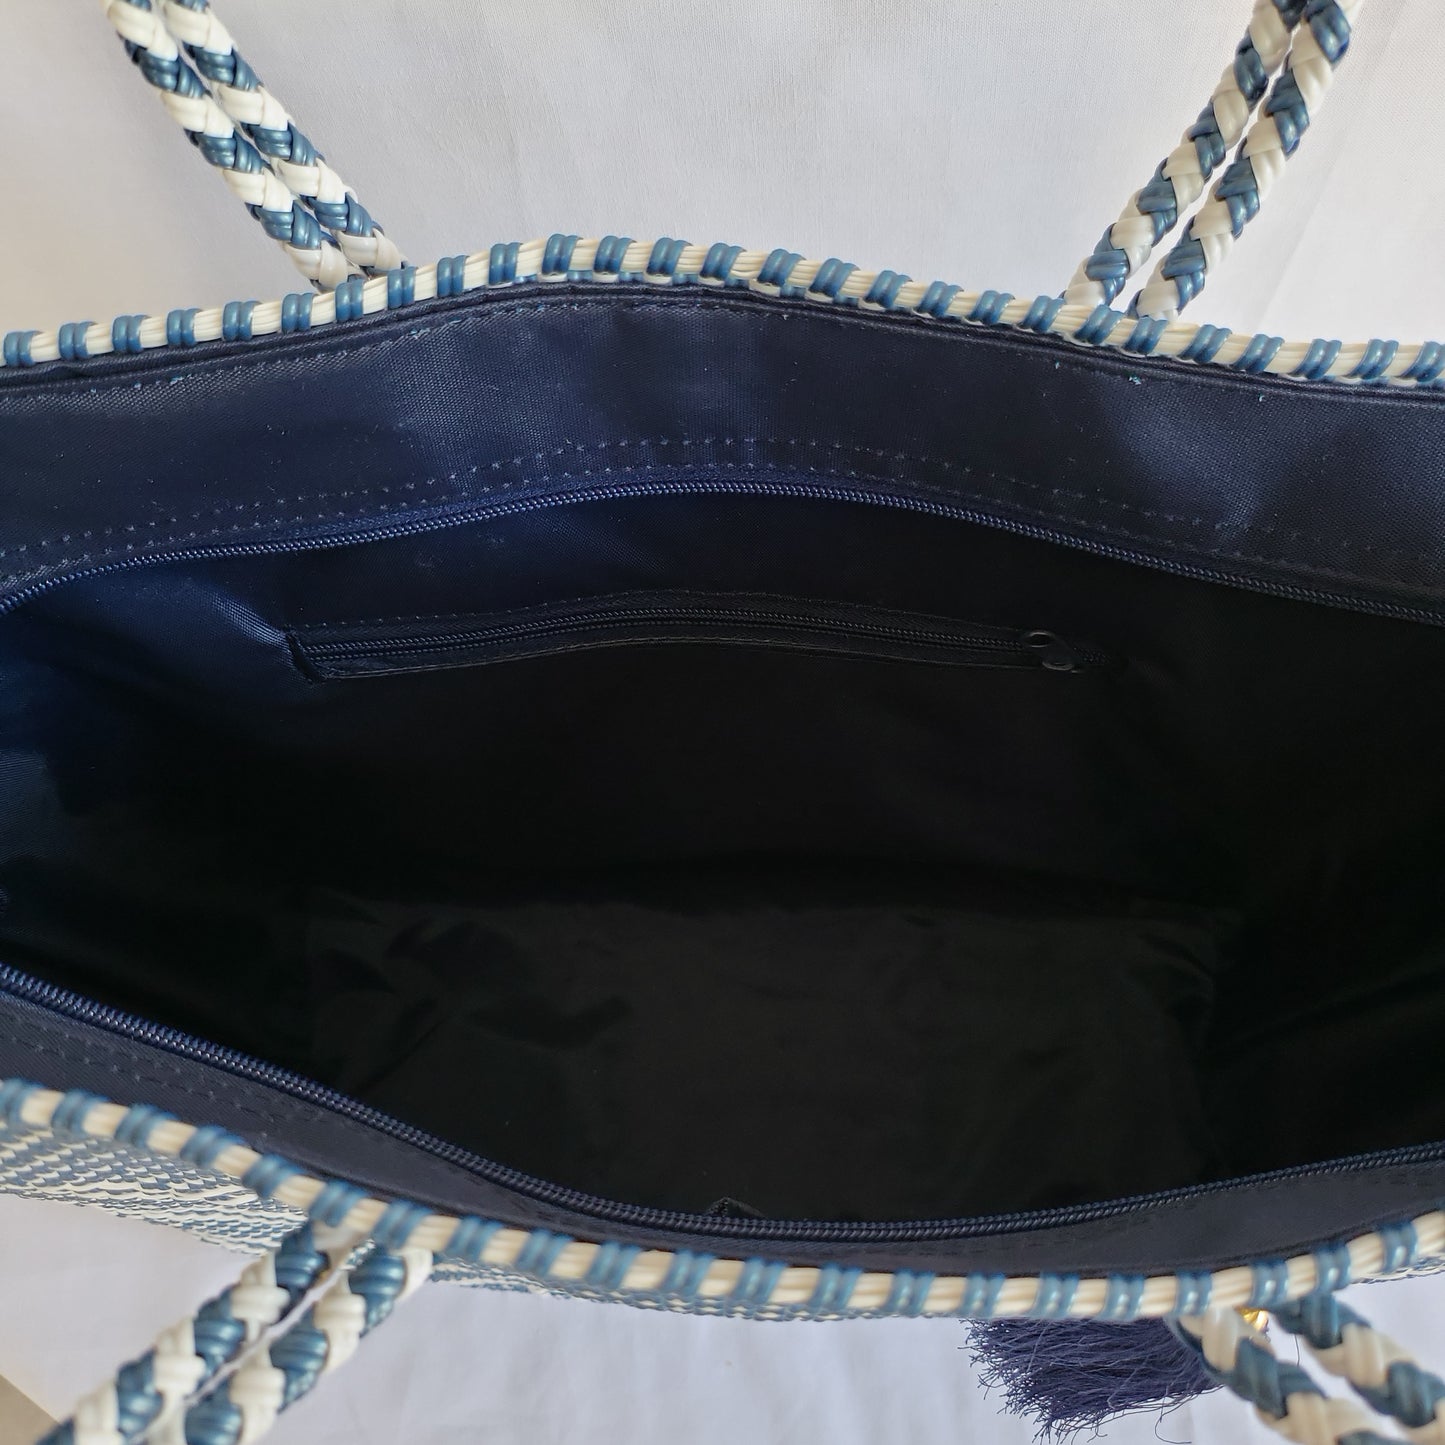 Lola Medium Bag - Zipper Blue & Double White